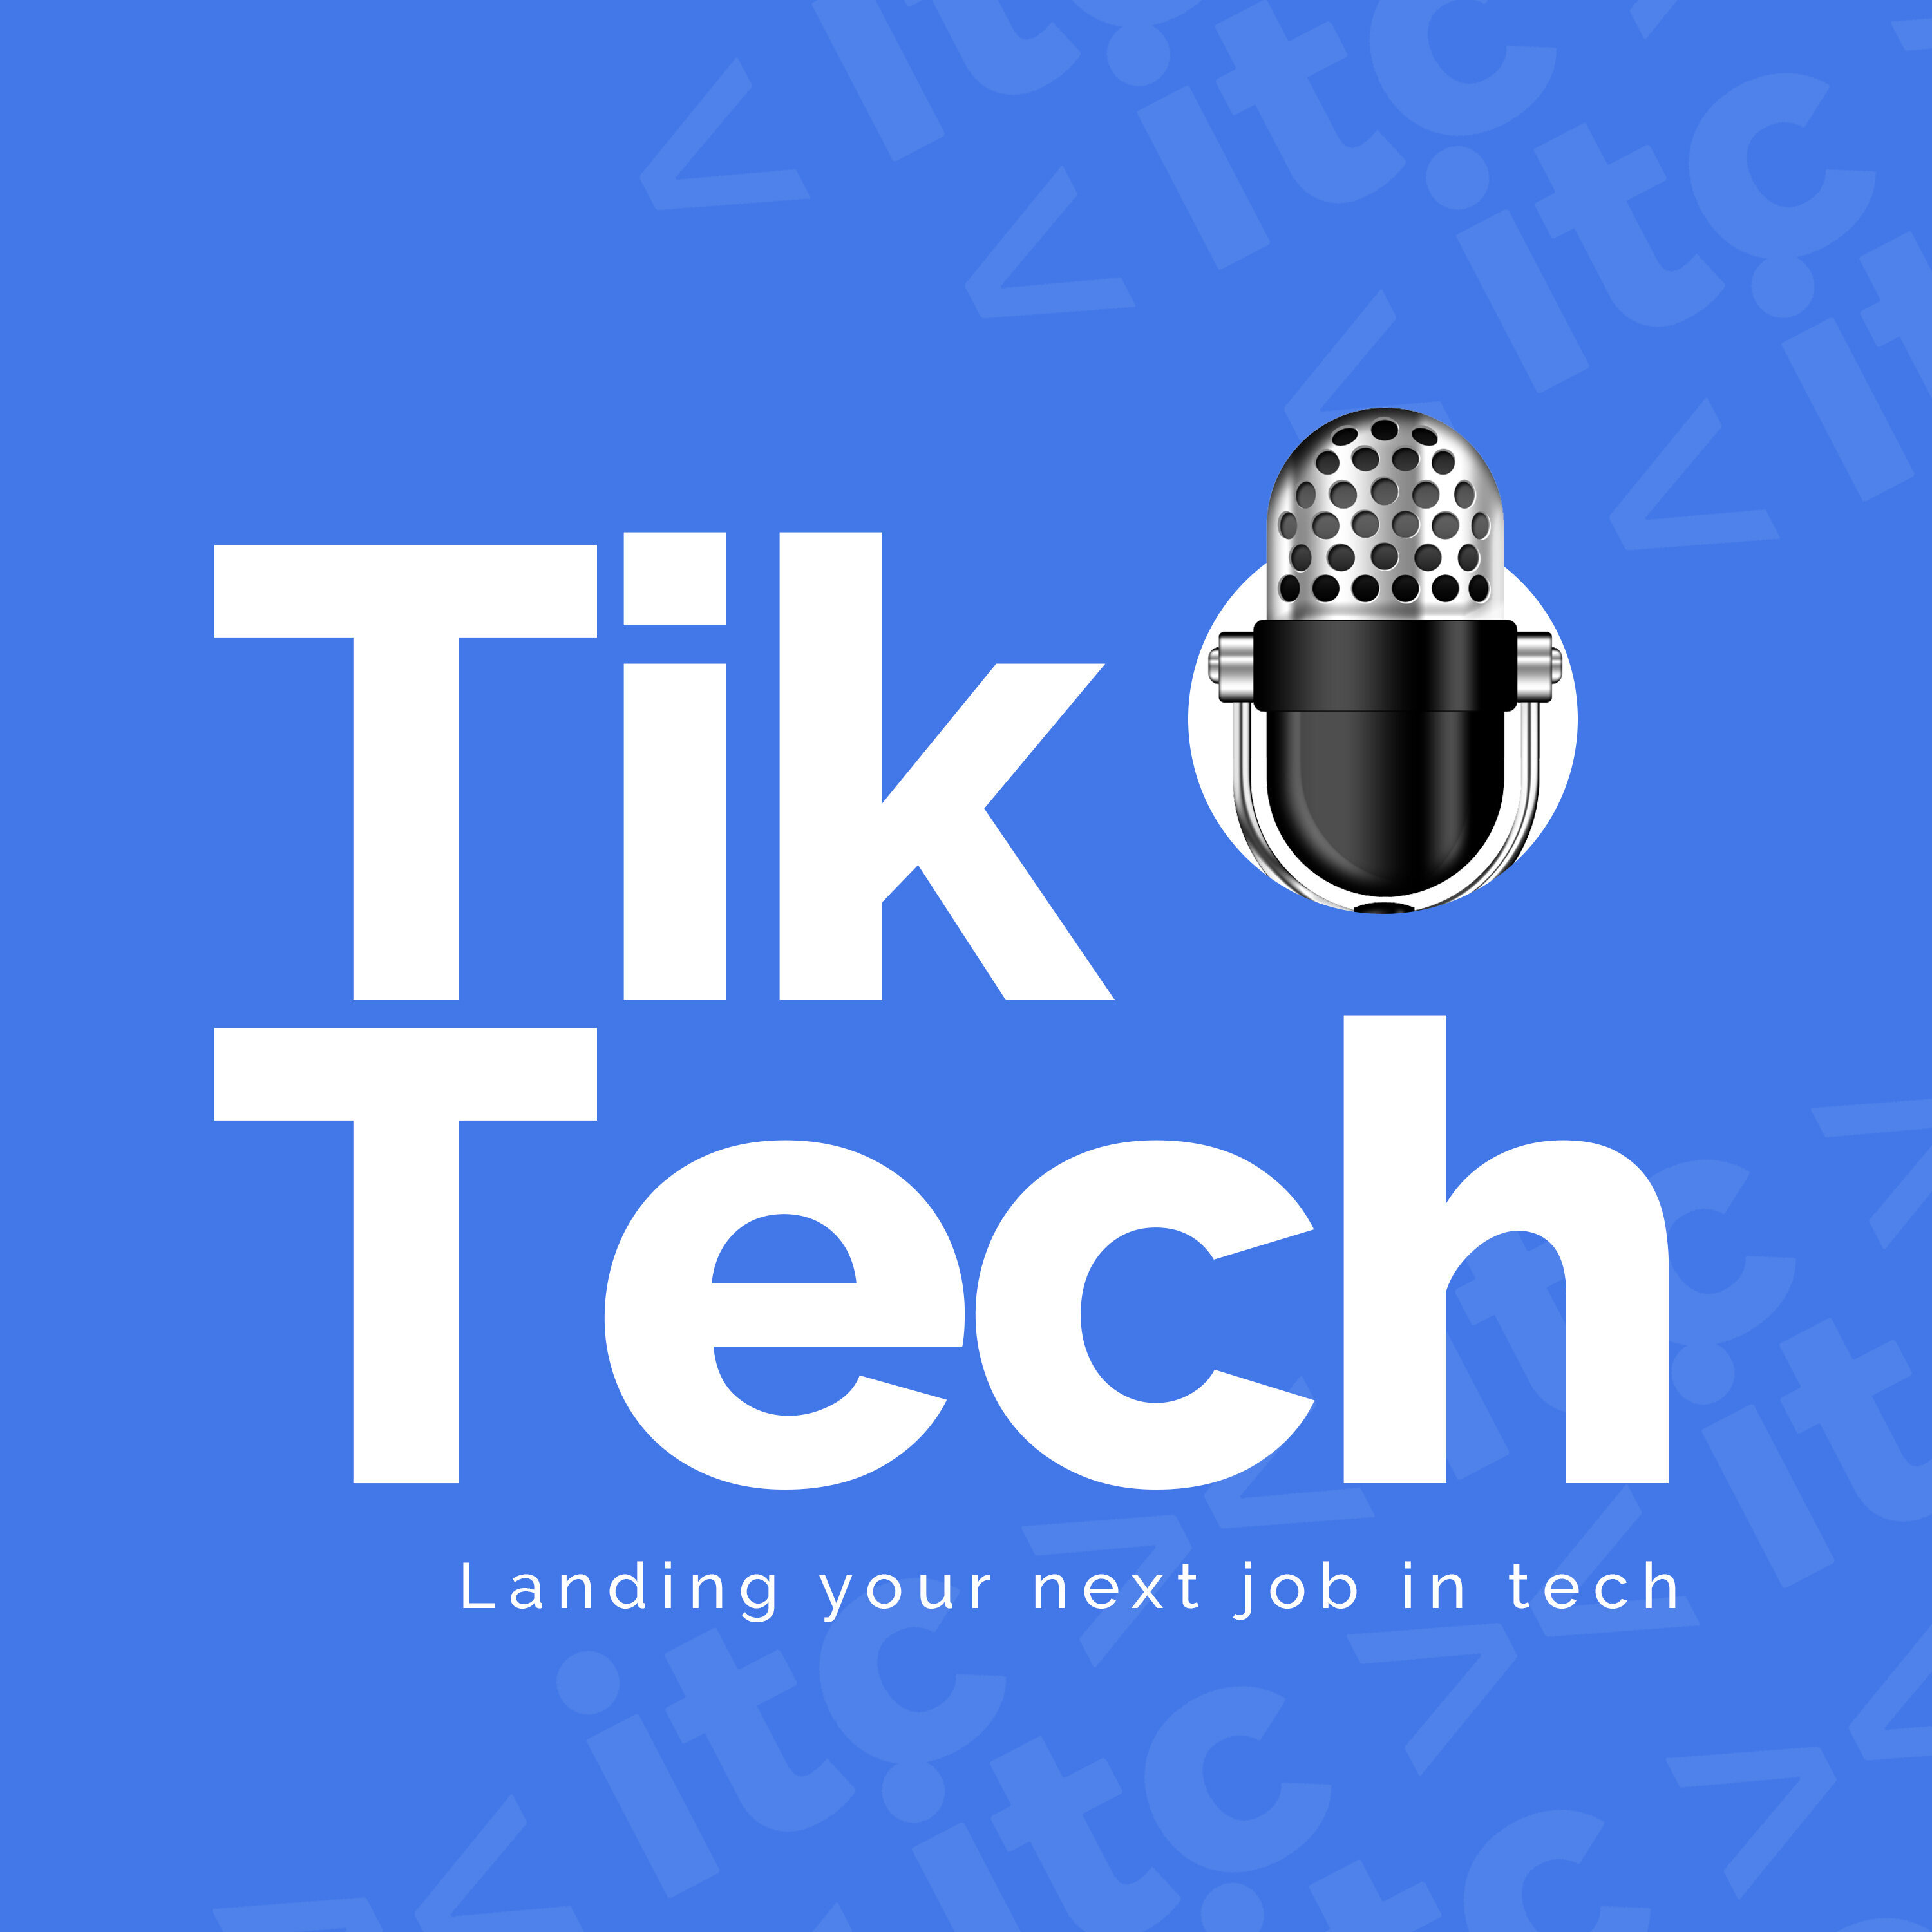 Tik Tech: Landing your next job in tech